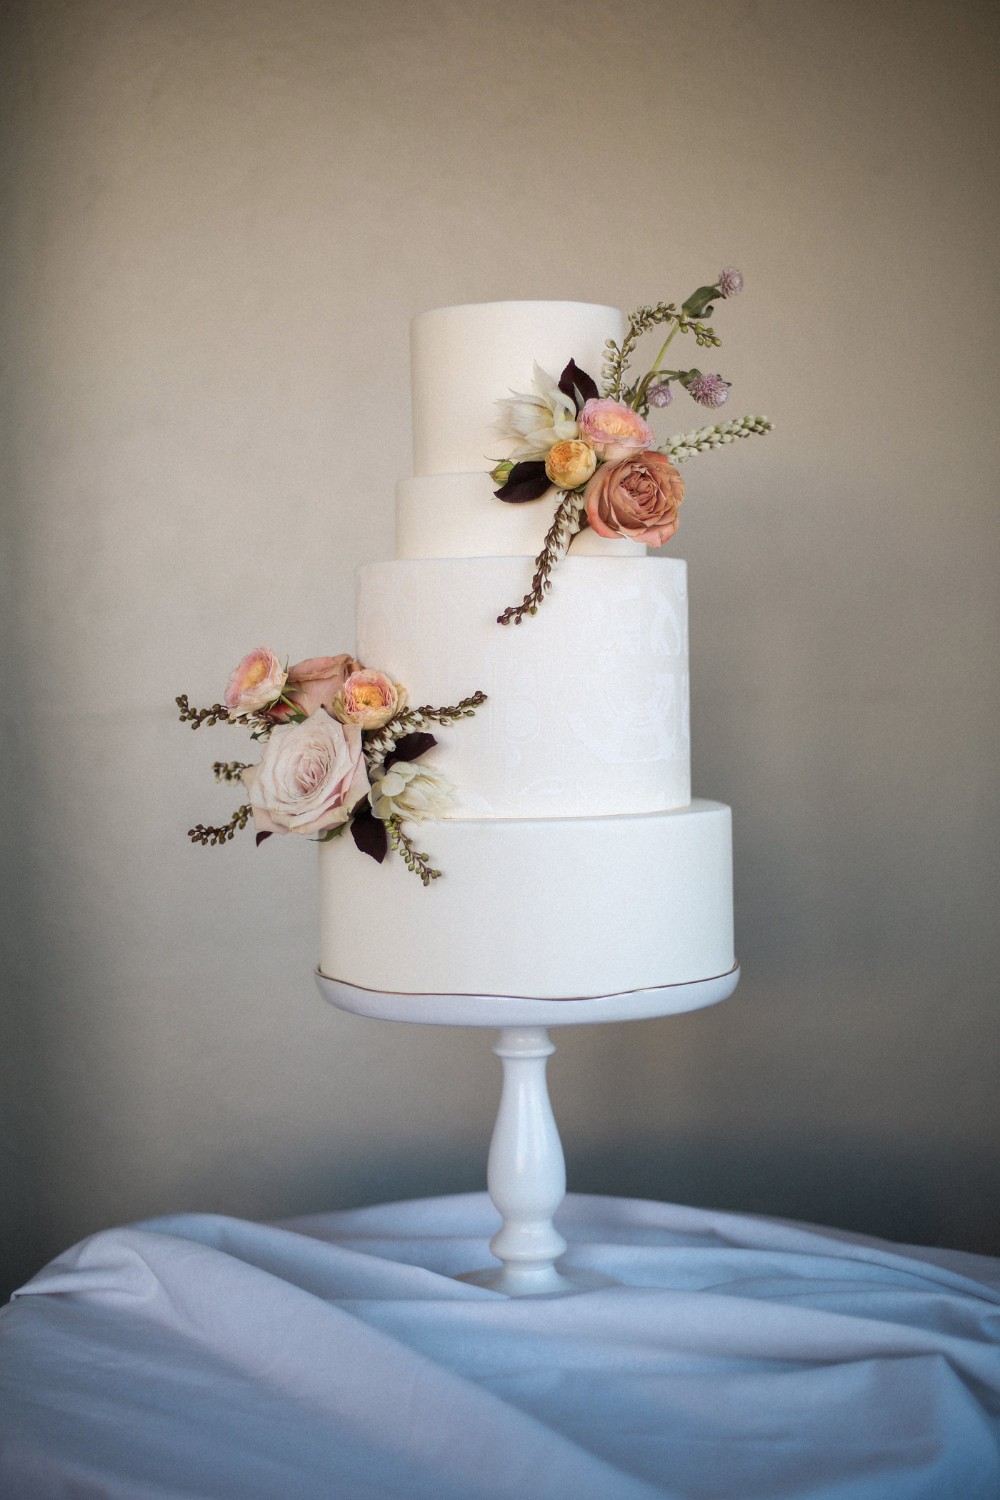 classic romantic wedding cake with flowers